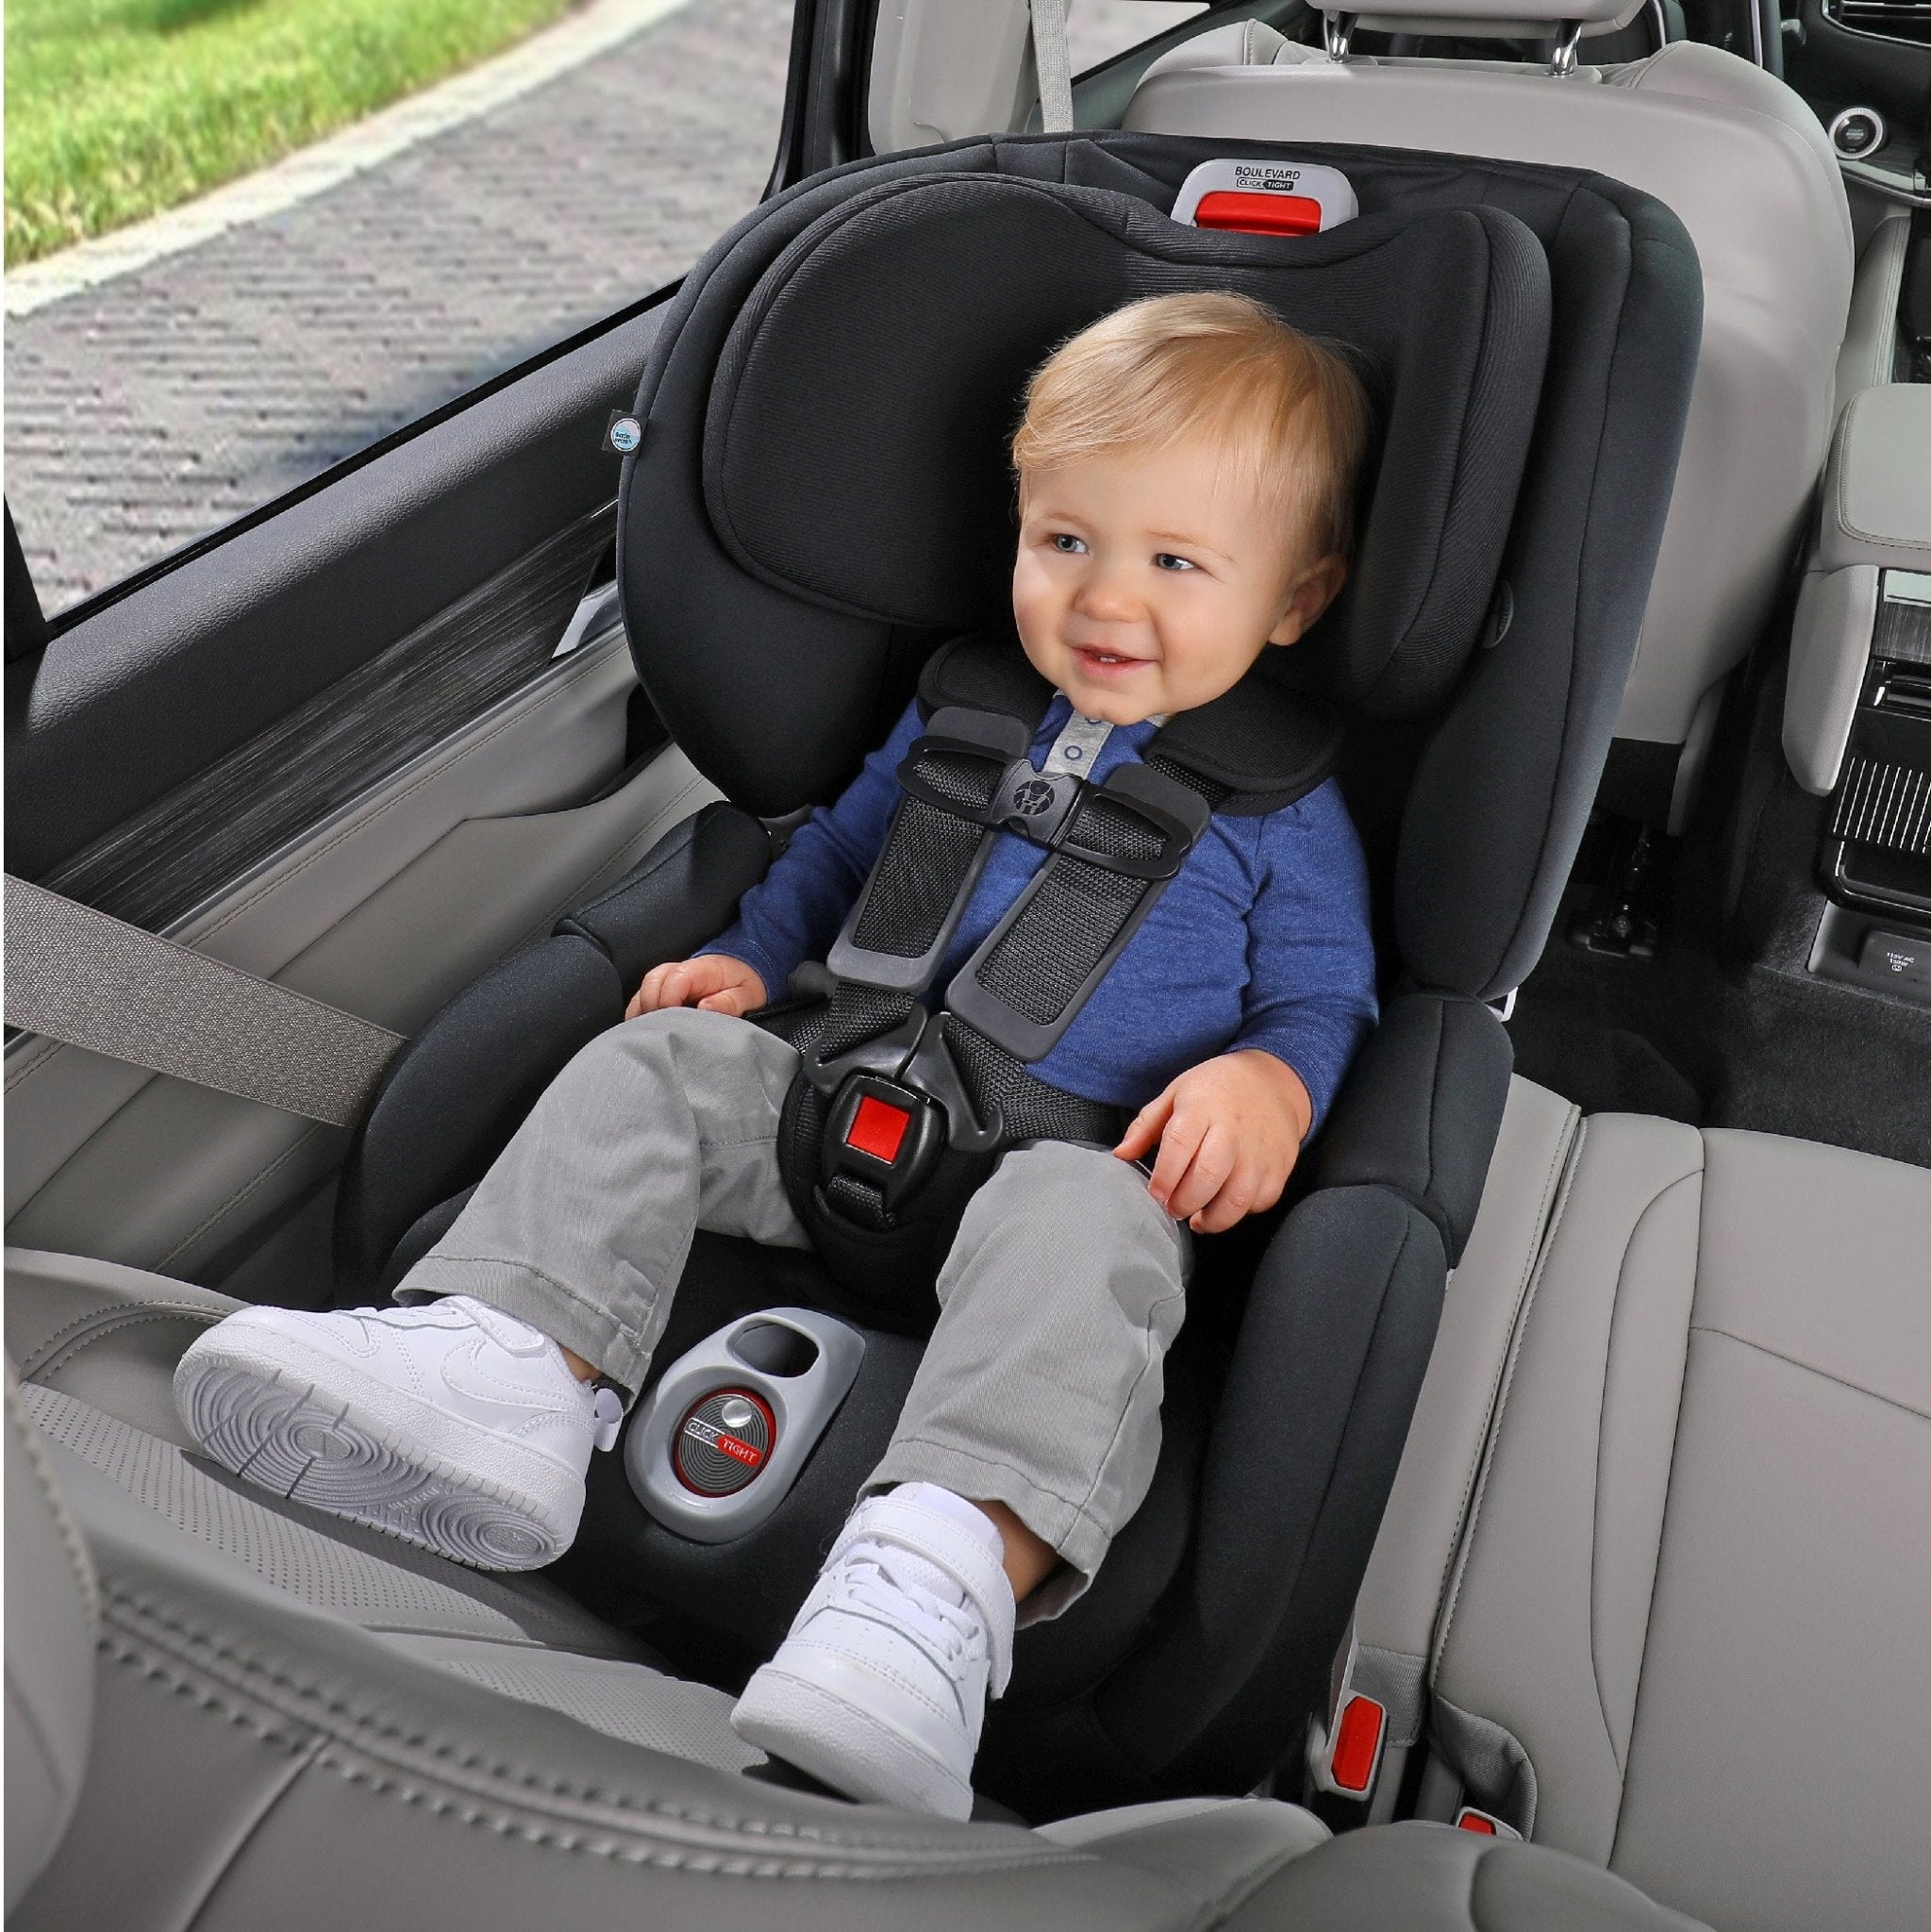 BRITAX Boulevard Clicktight Convertible Car Seat, -- ANB Baby